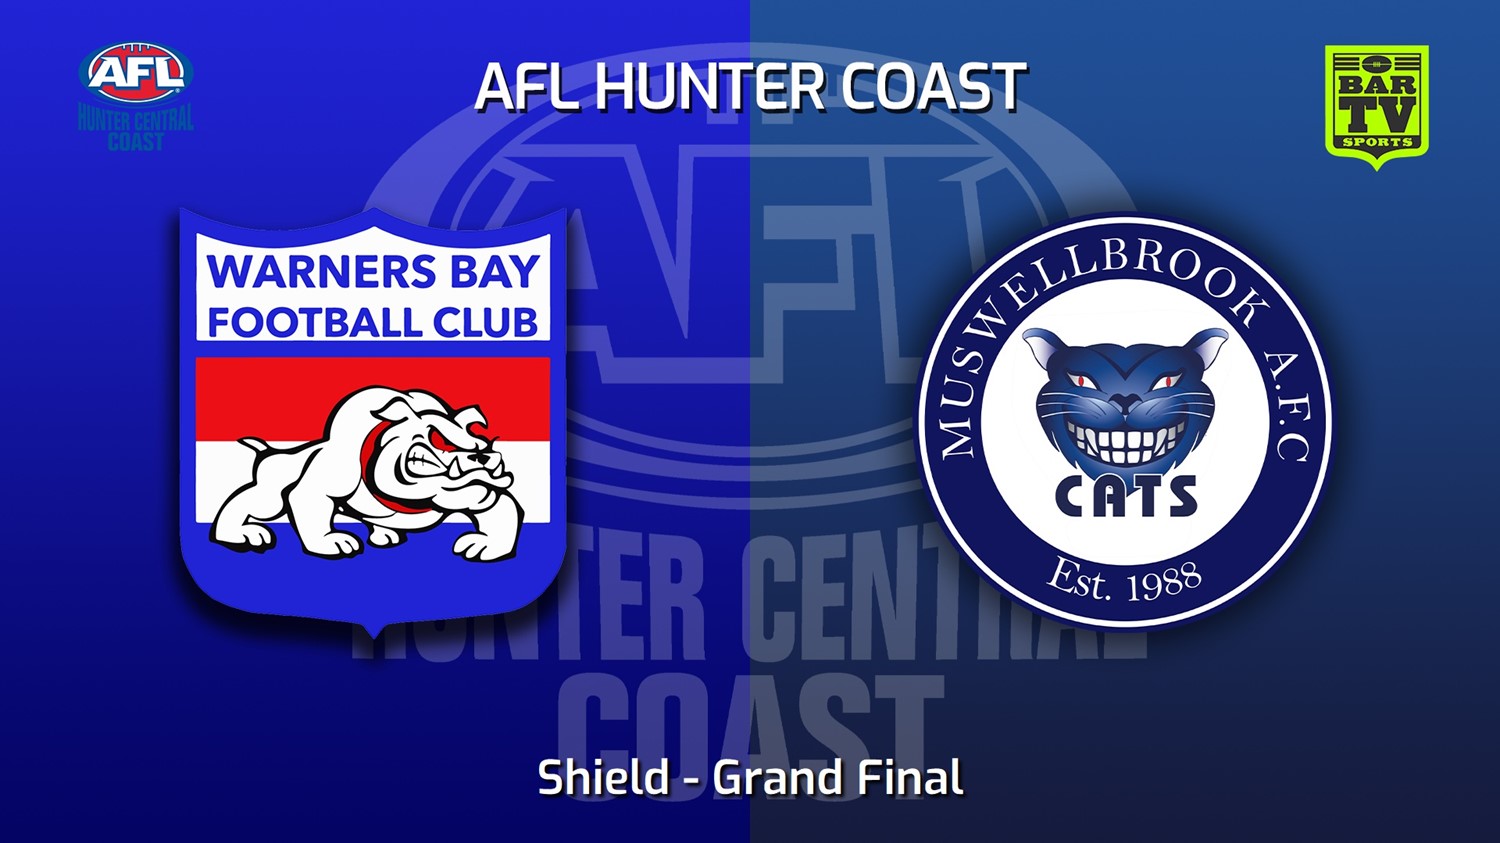 220917-AFL Hunter Central Coast Grand Final - Shield - Warners Bay Bulldogs v Muswellbrook Cats Minigame Slate Image